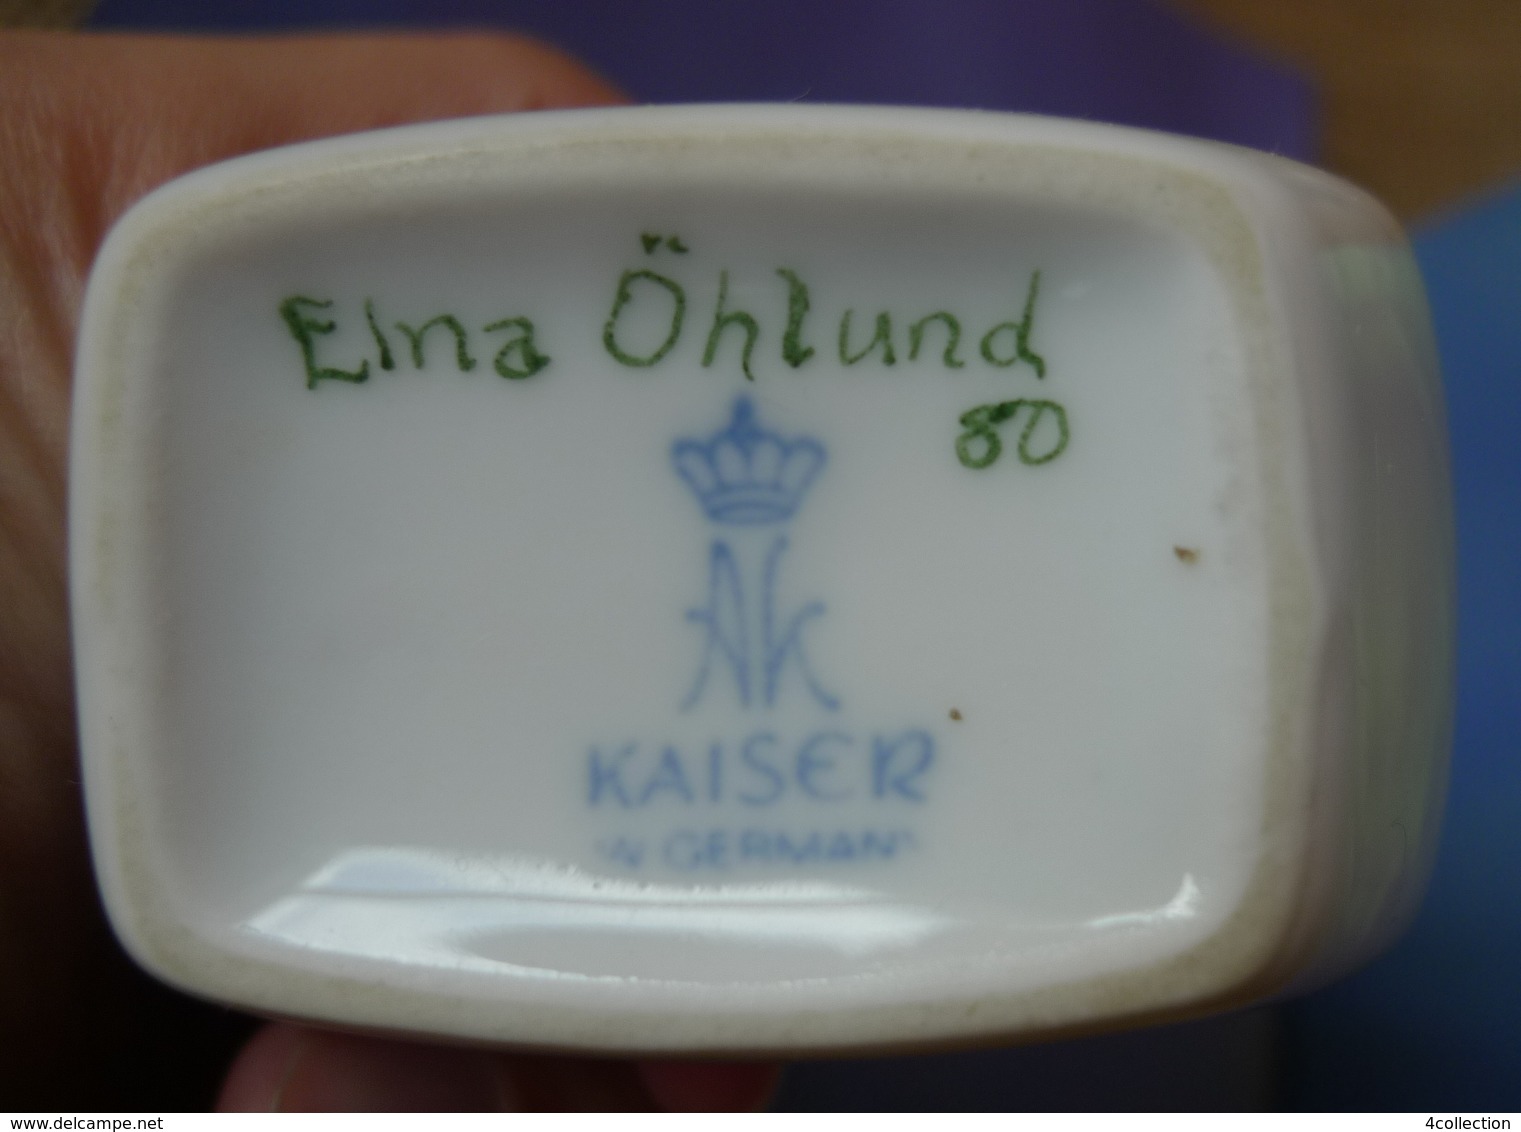 VTG German Pottery Hand Painted VASE hallmark AK KAISER signed by ELNA OHLUND 80